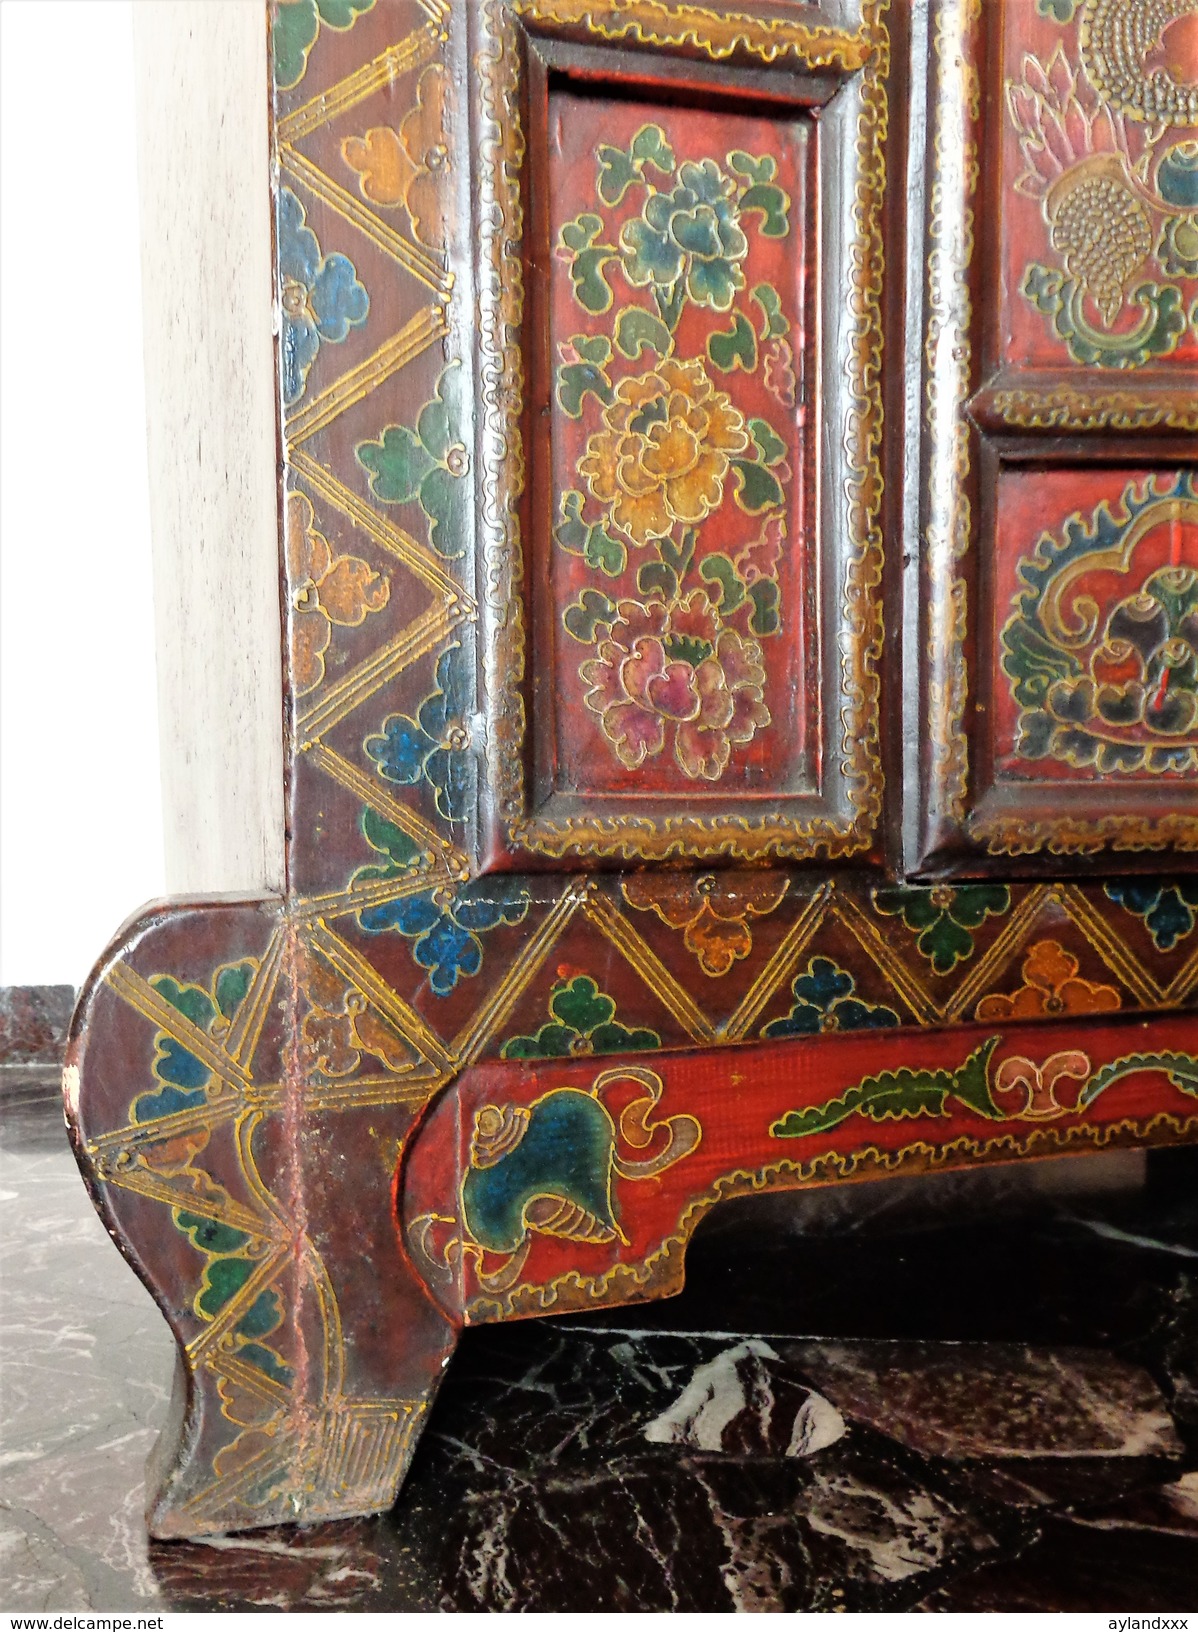 Tibetan antique painted wood cabinet